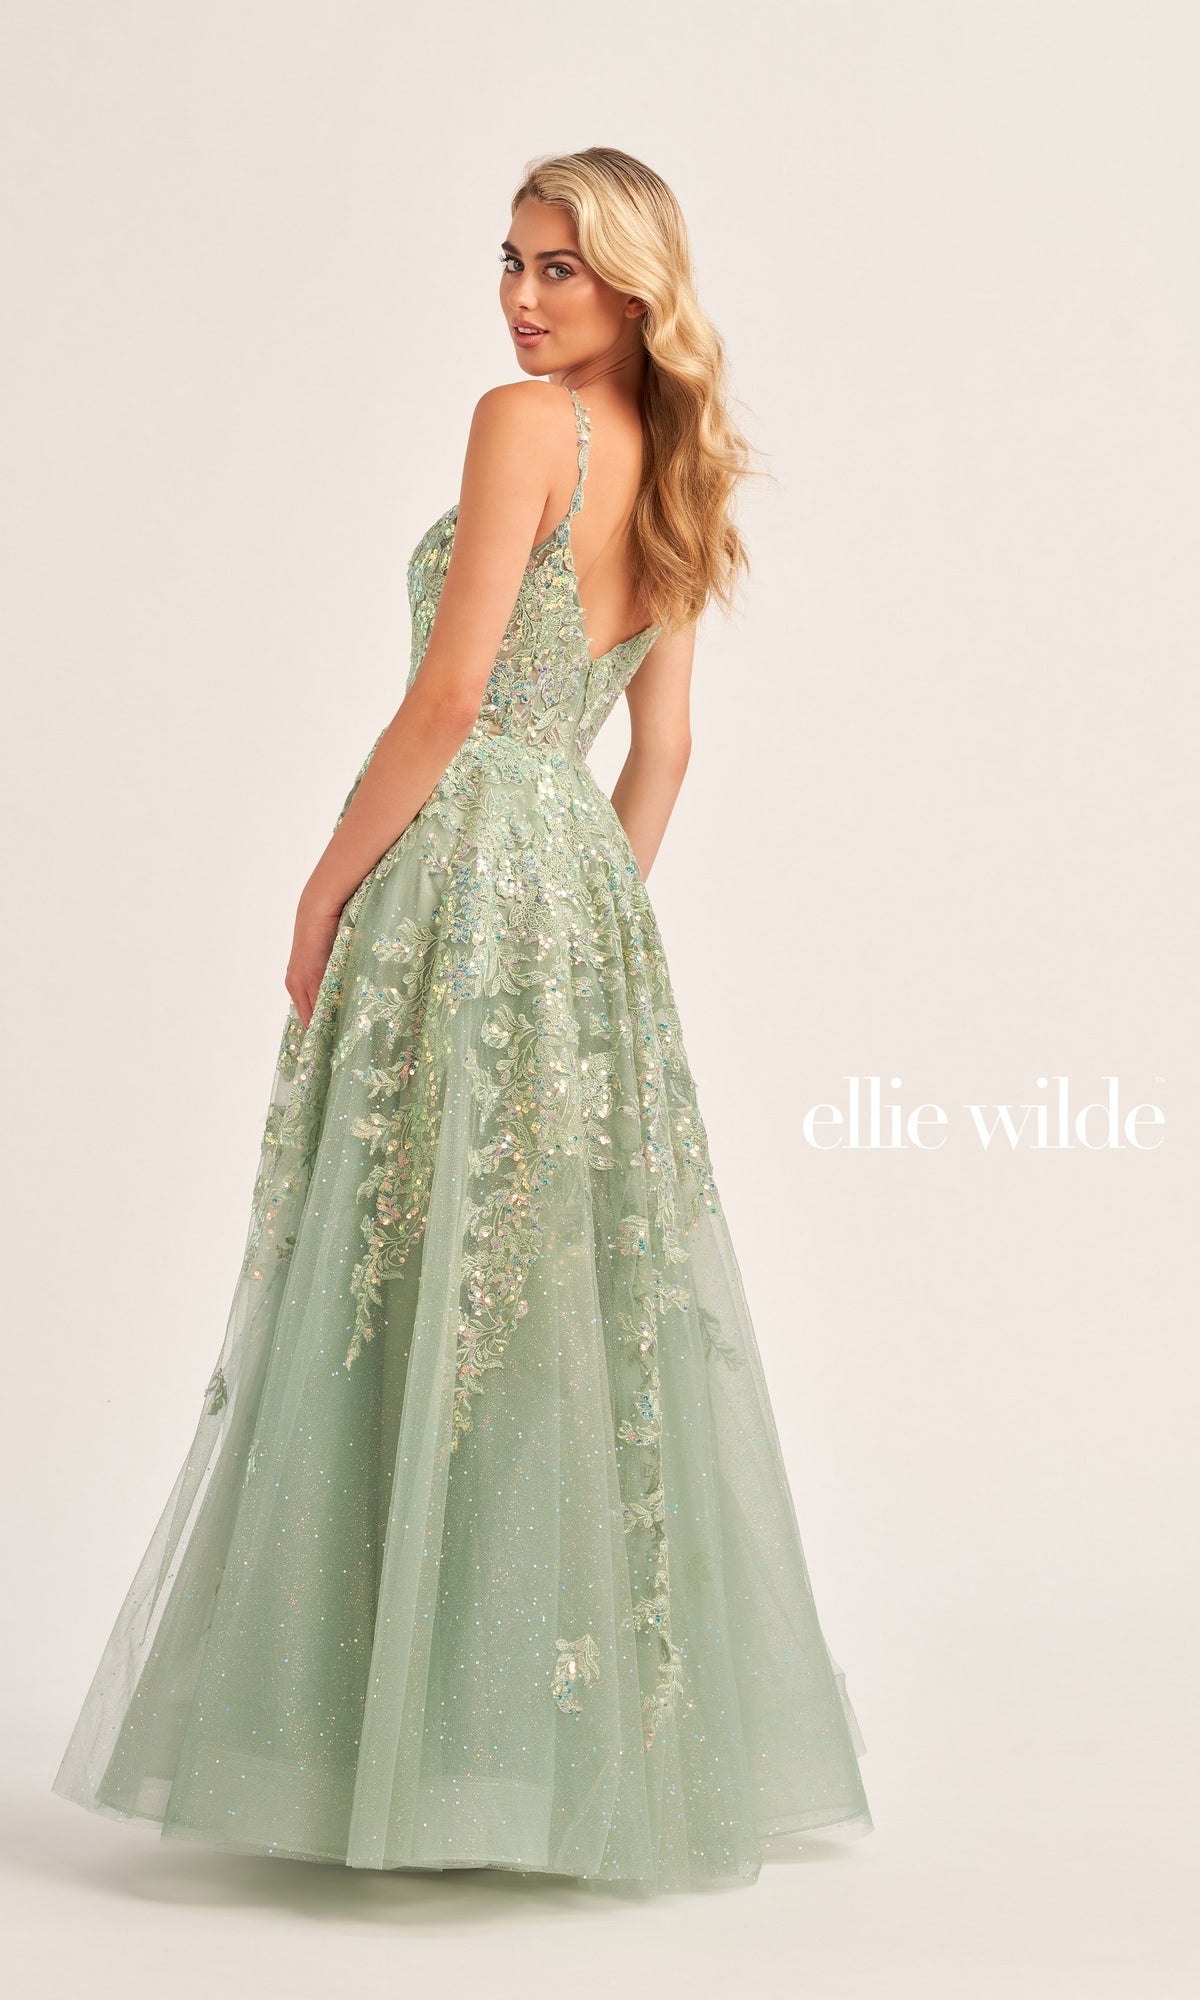 Glitter-Tulle Ellie Wilde Long Prom Dress EW35114